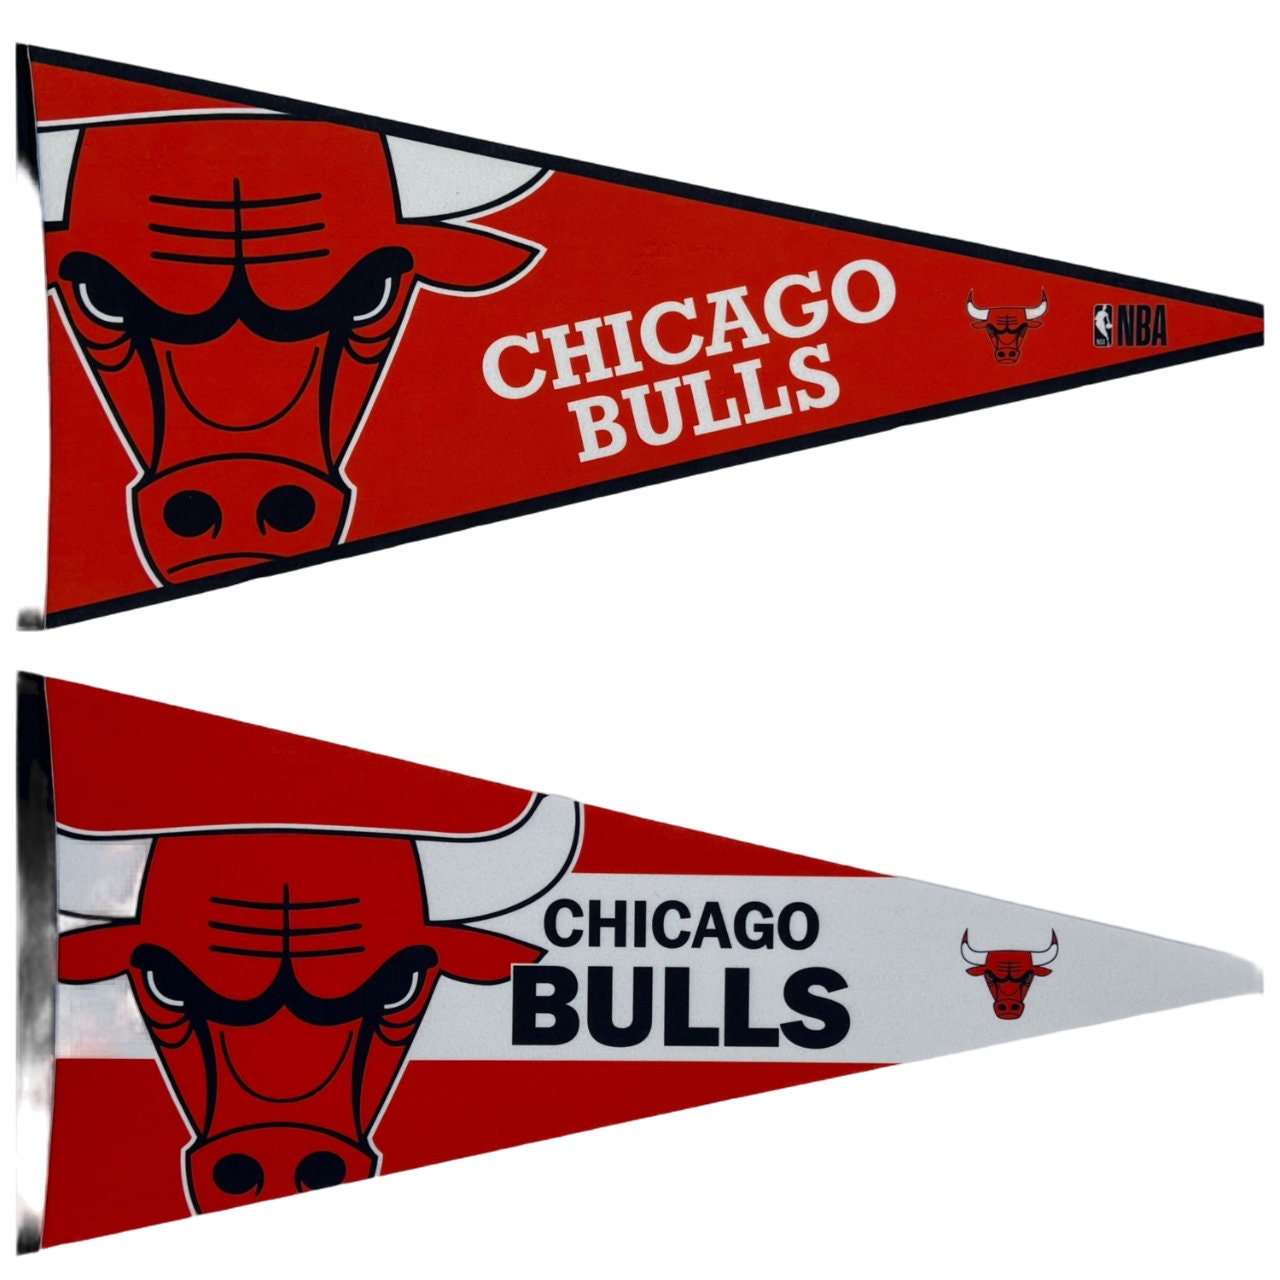 Chicago Bulls nba pennants vaantje vintage 90s vlag vaantje fanion pennant flag basketball michael jordan usa 23 pippen rodman - Michael Jordan